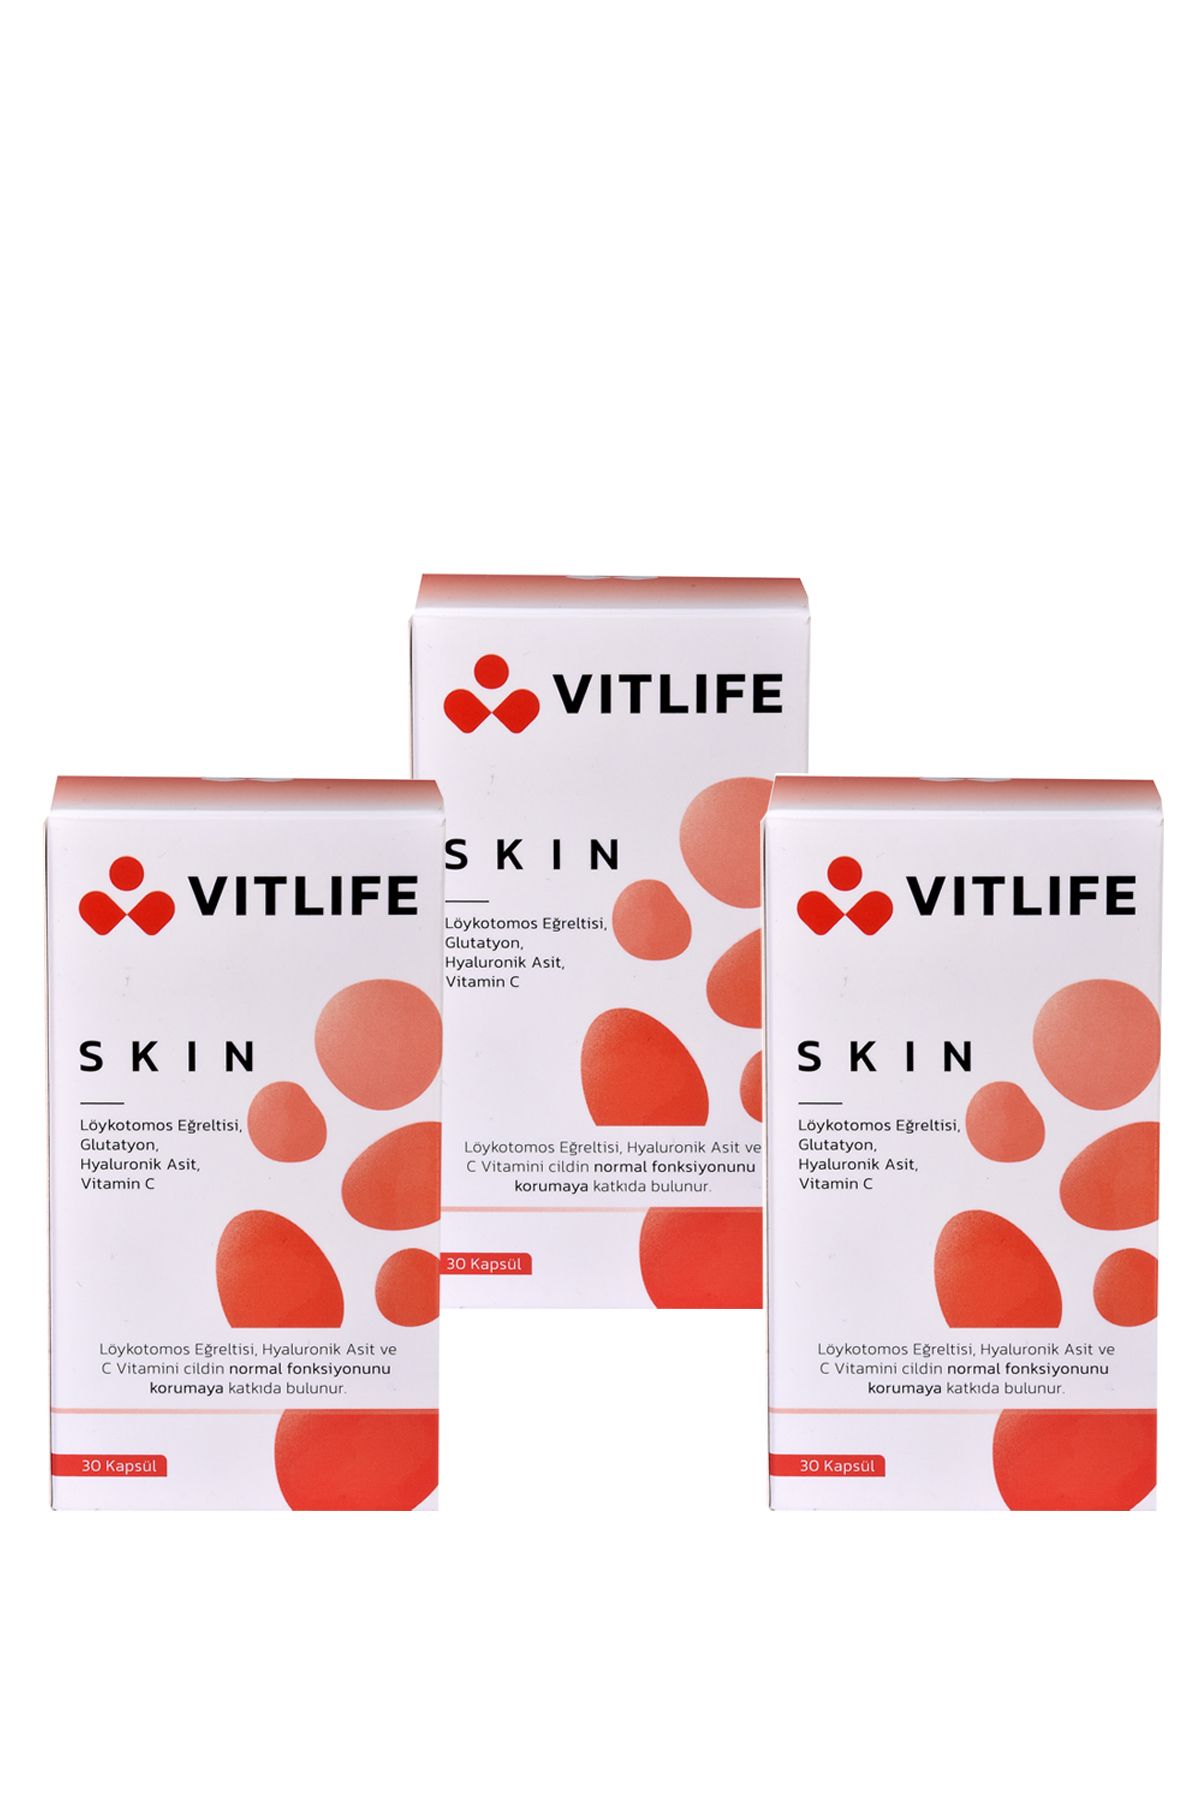 Vitlife Skin Cilt Vitamini Löykotomos Eğreltisi, Hyaluronic Acid, Vitamin C, Glutatyon, Q10 3 KUTU